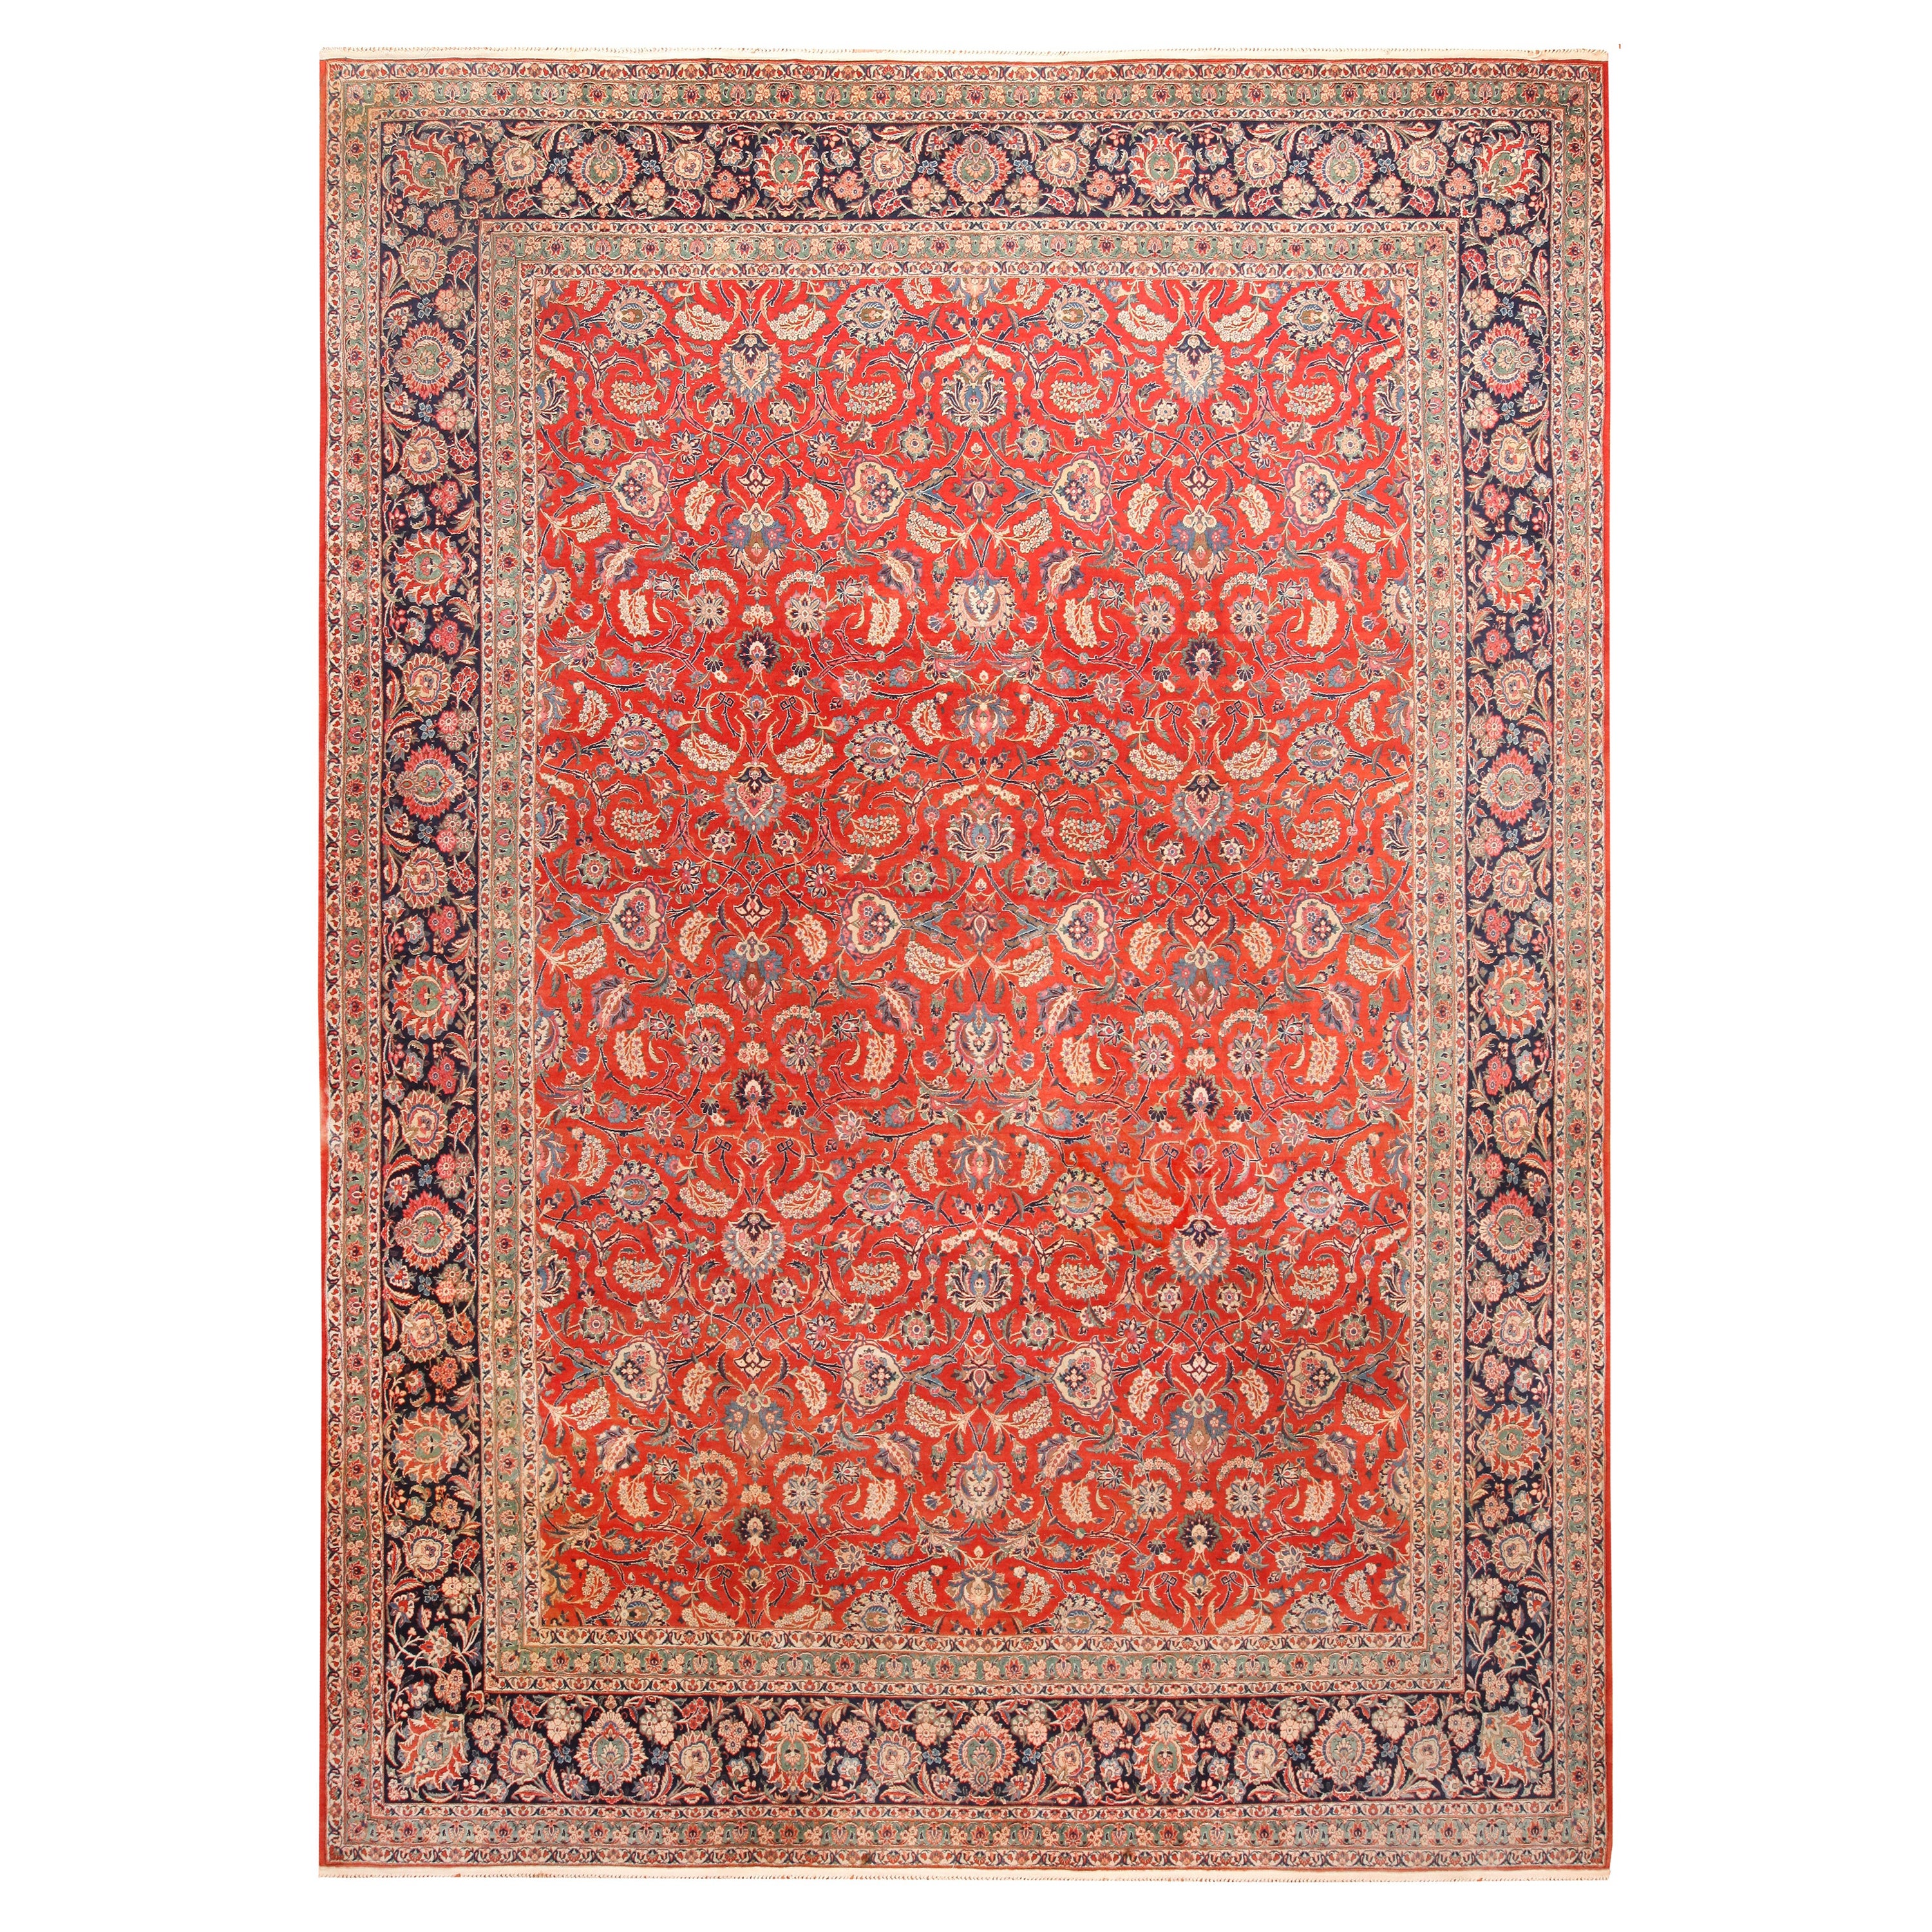 Grand tapis persan Kashan Dabir ancien de 12' x 17' en vente